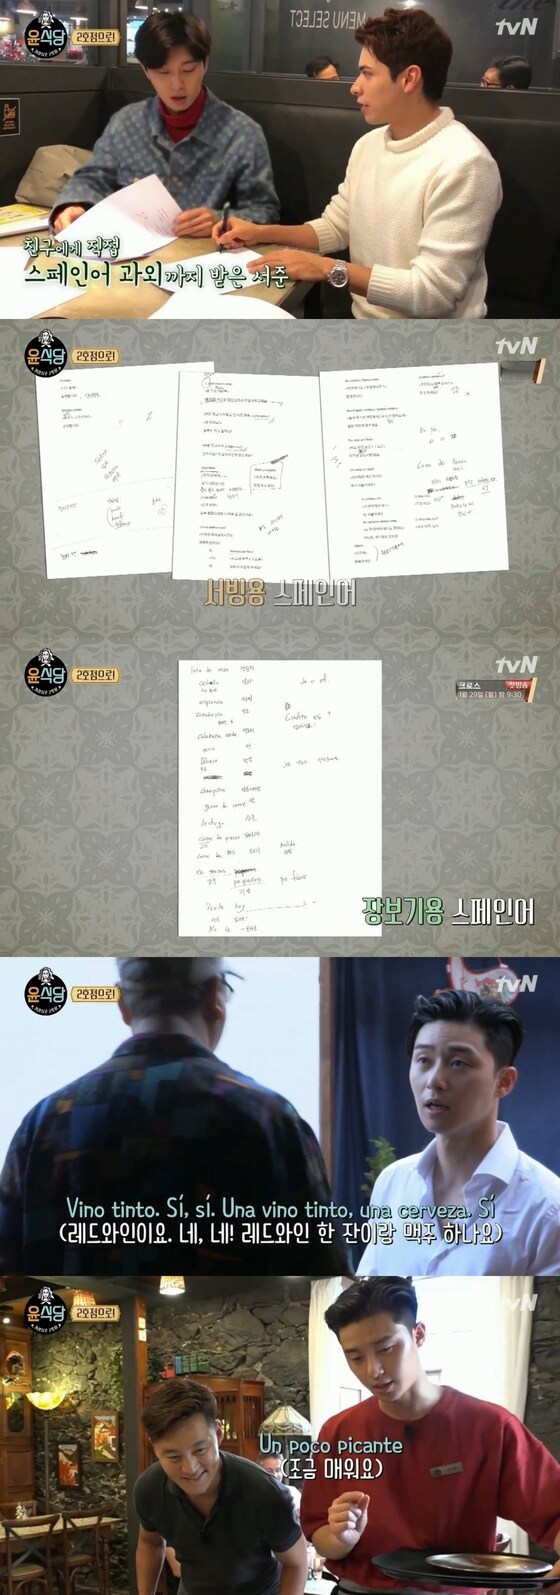 tvN '윤식당2' 캡처© News1